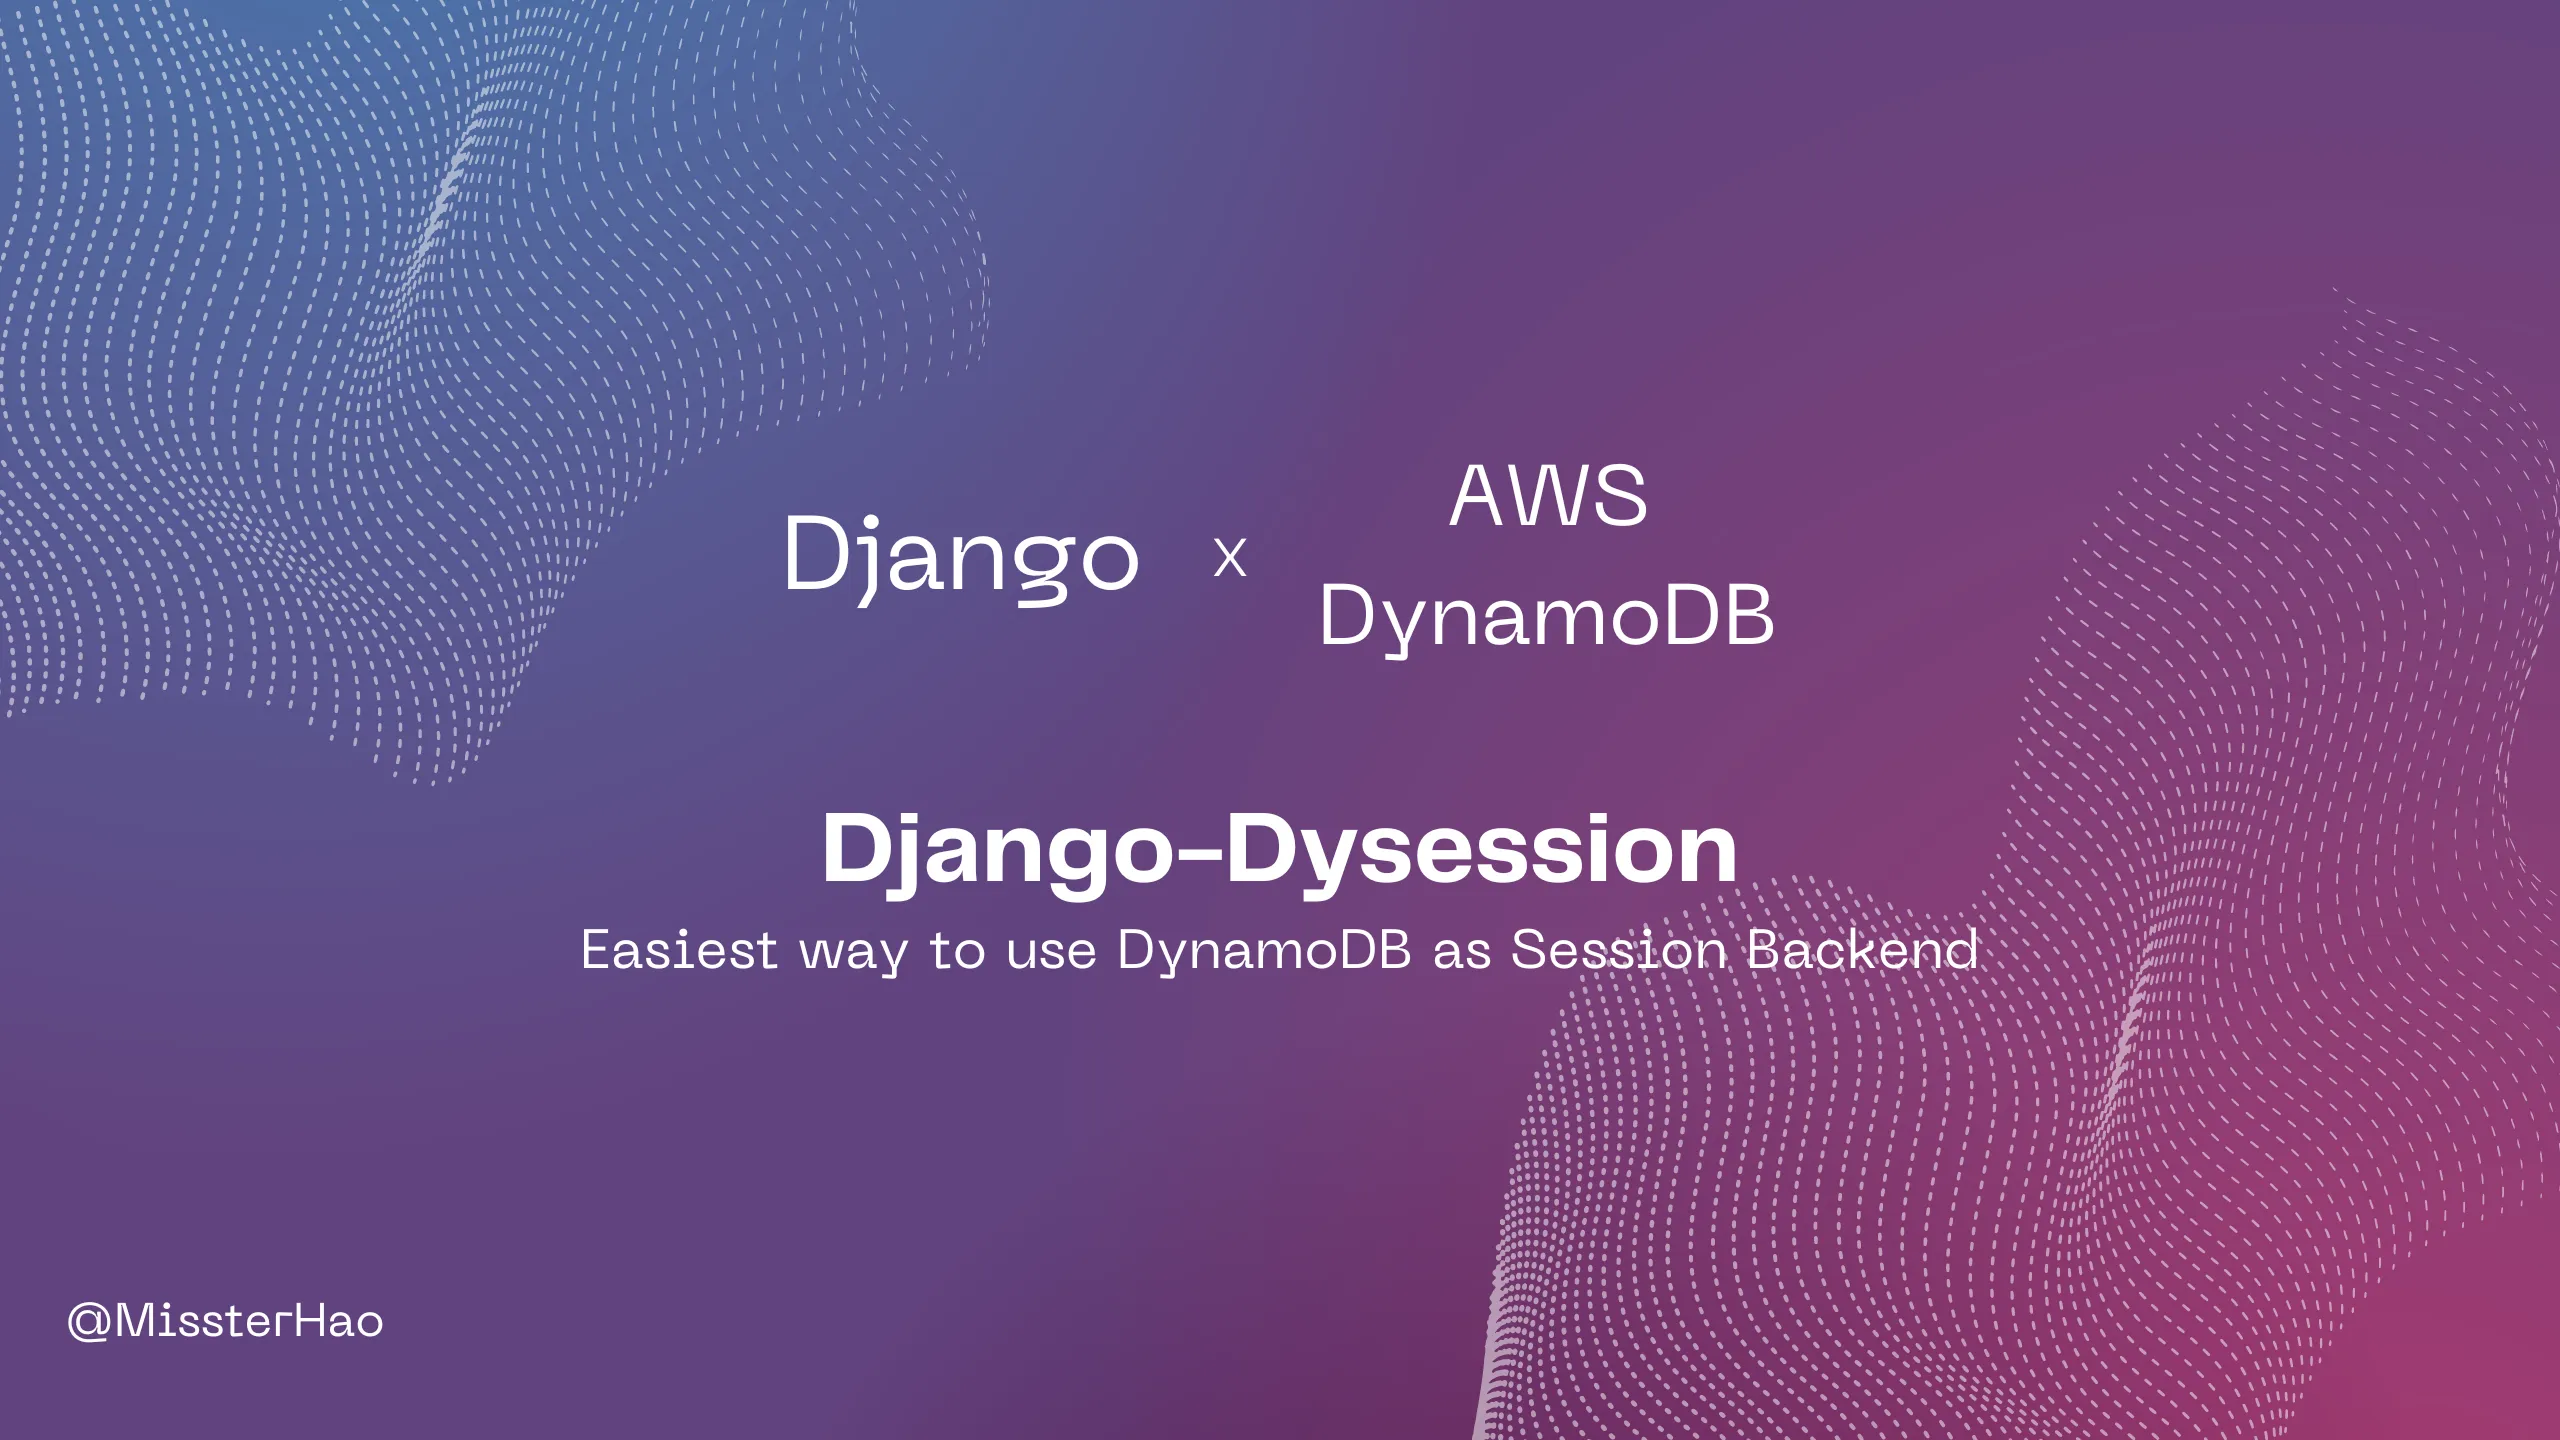 Django-dysession: The reasons you may want to choose aws dynamodb as session-database!